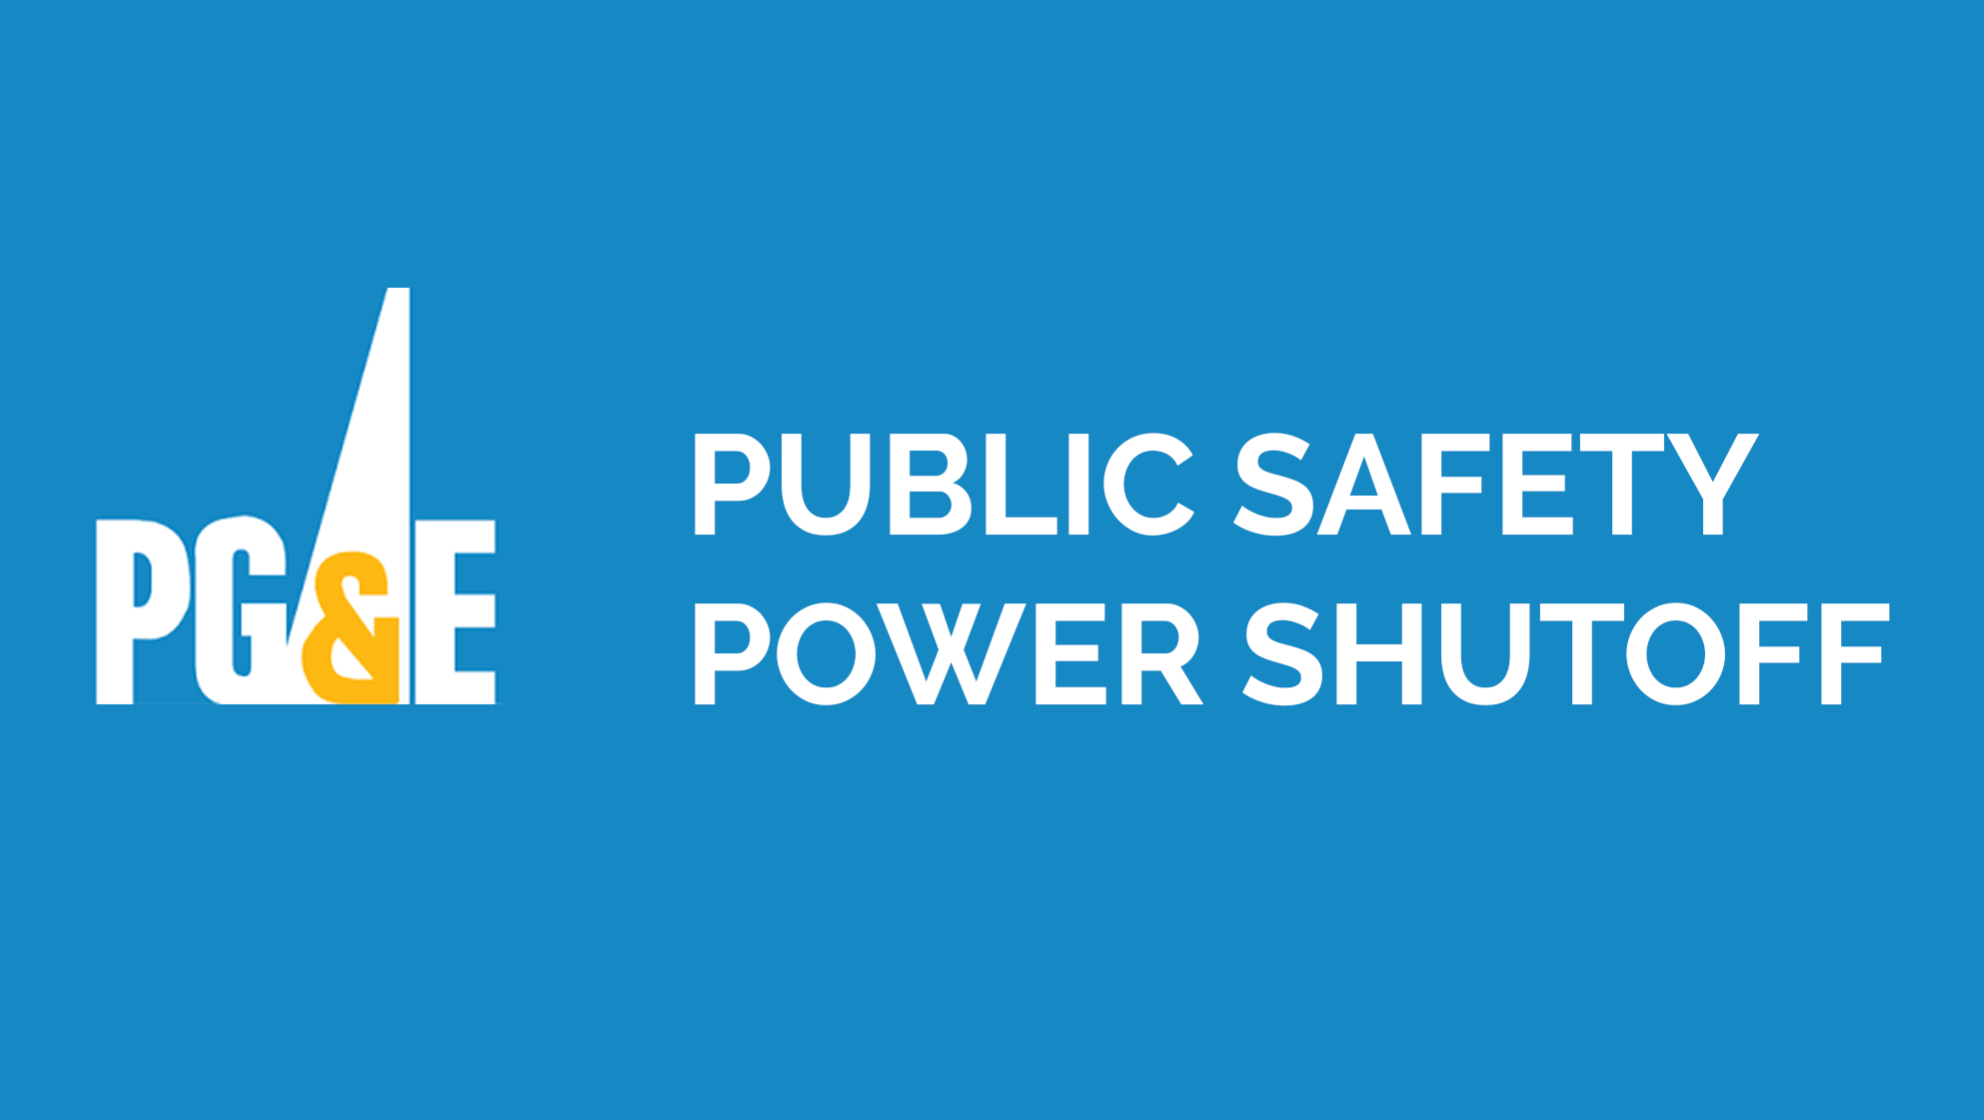 PG&E Public Safety Power Shutoff graphic